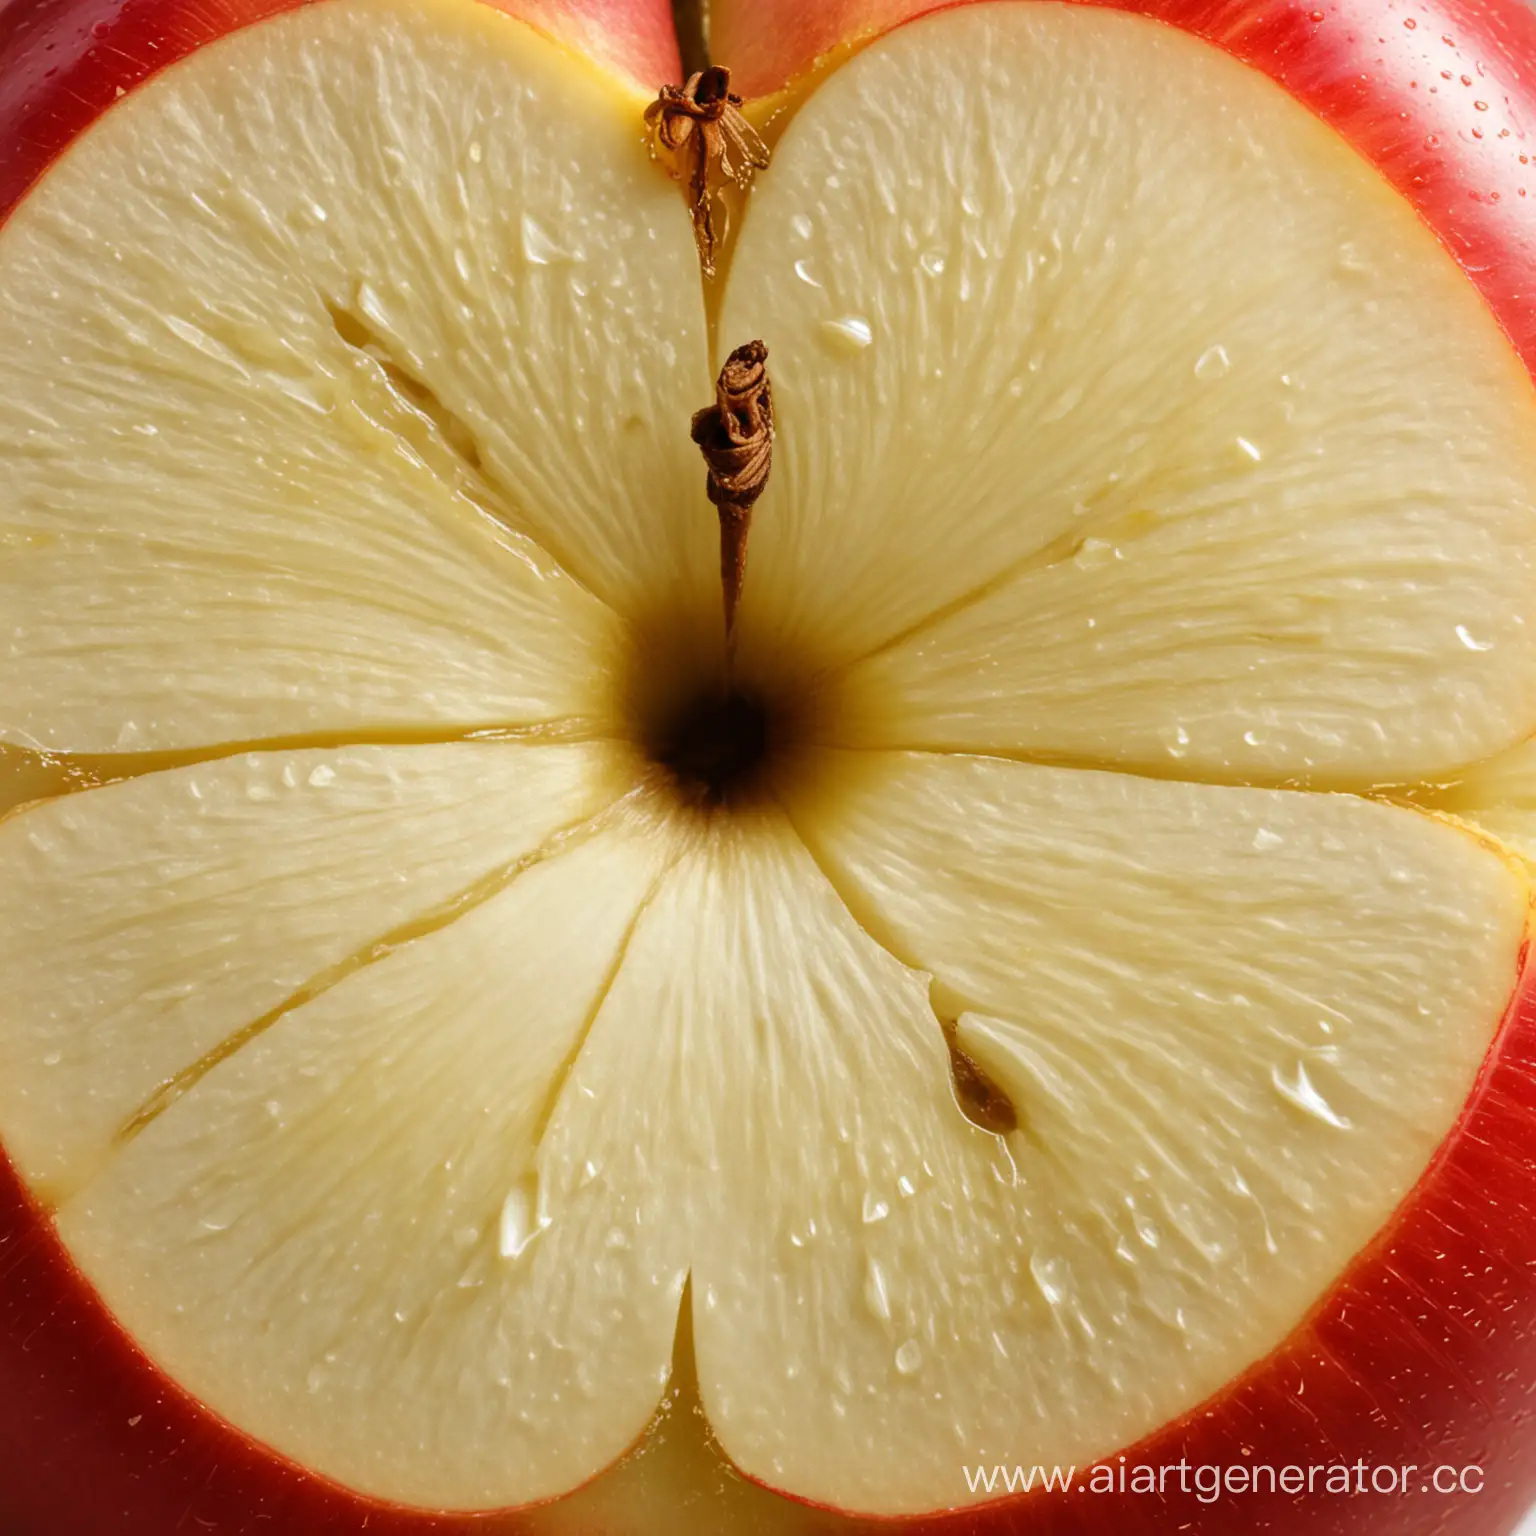 Fresh-and-Tempting-Apple-Slice-on-Display